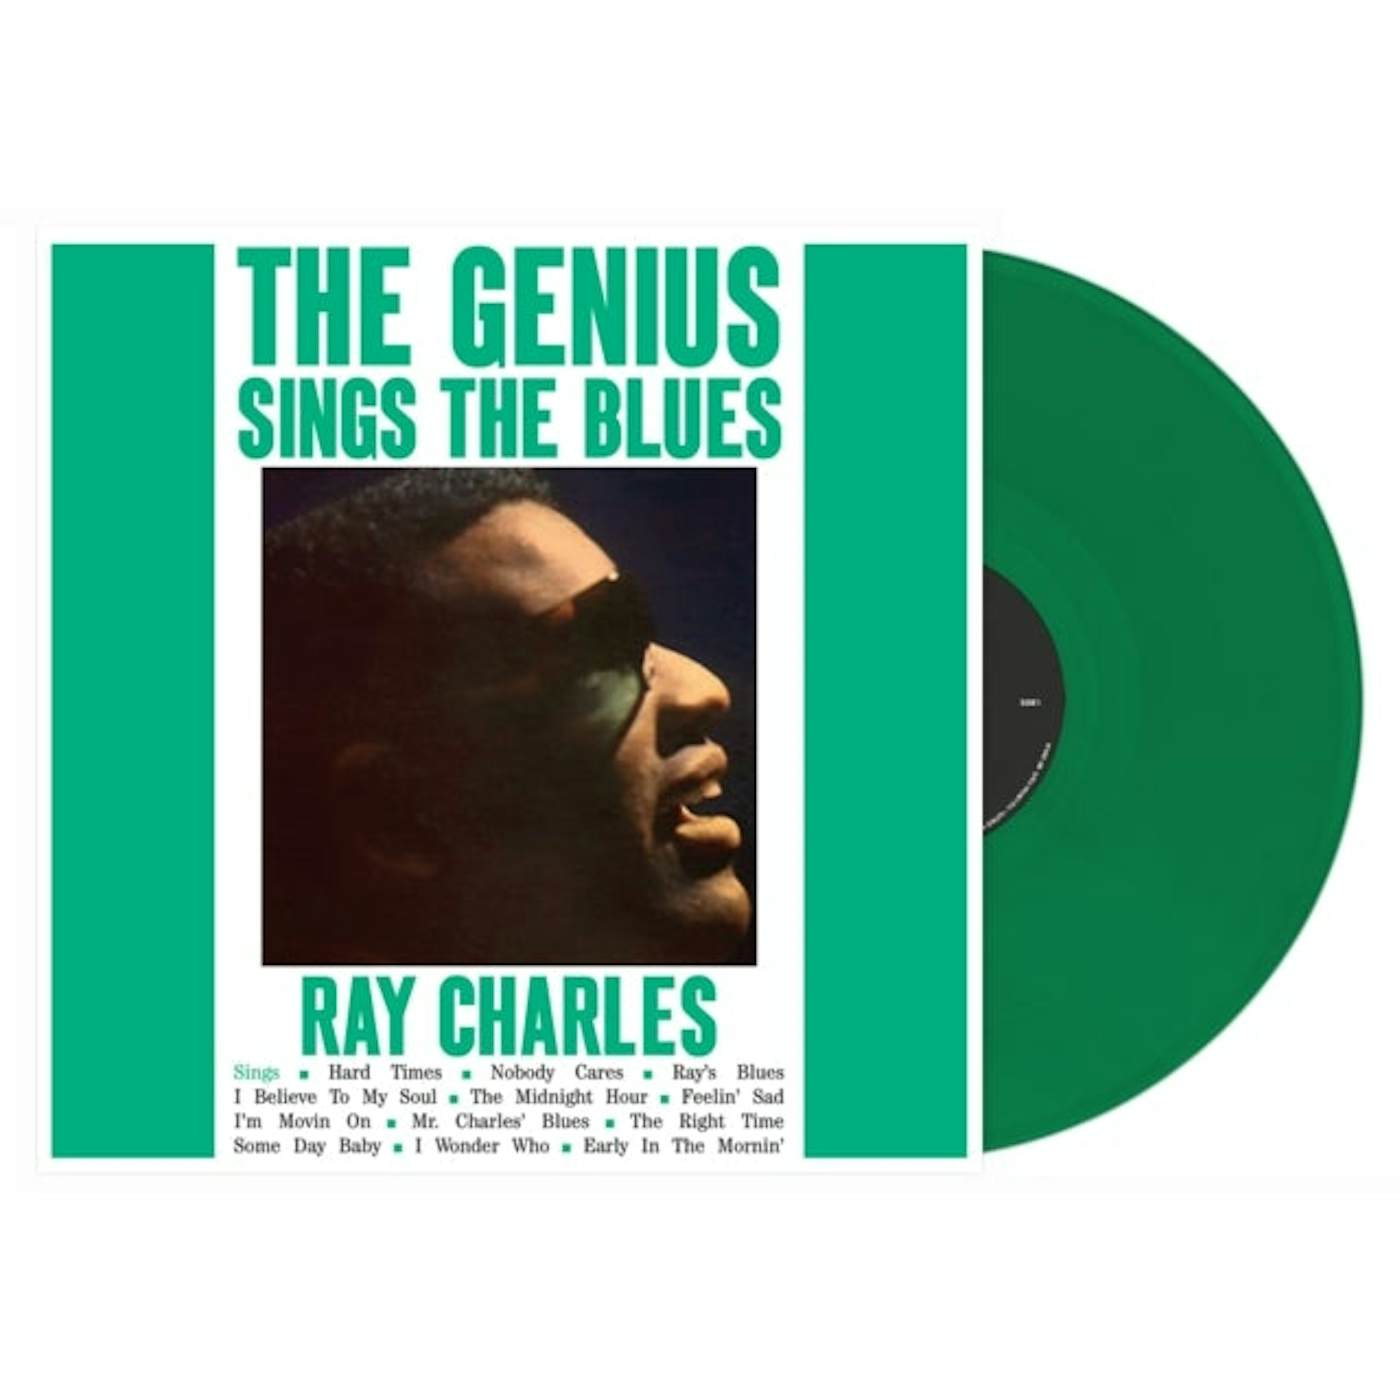 Ray Charles LP Vinyl Record - The Genius Sings The Blues (Green Vinyl)